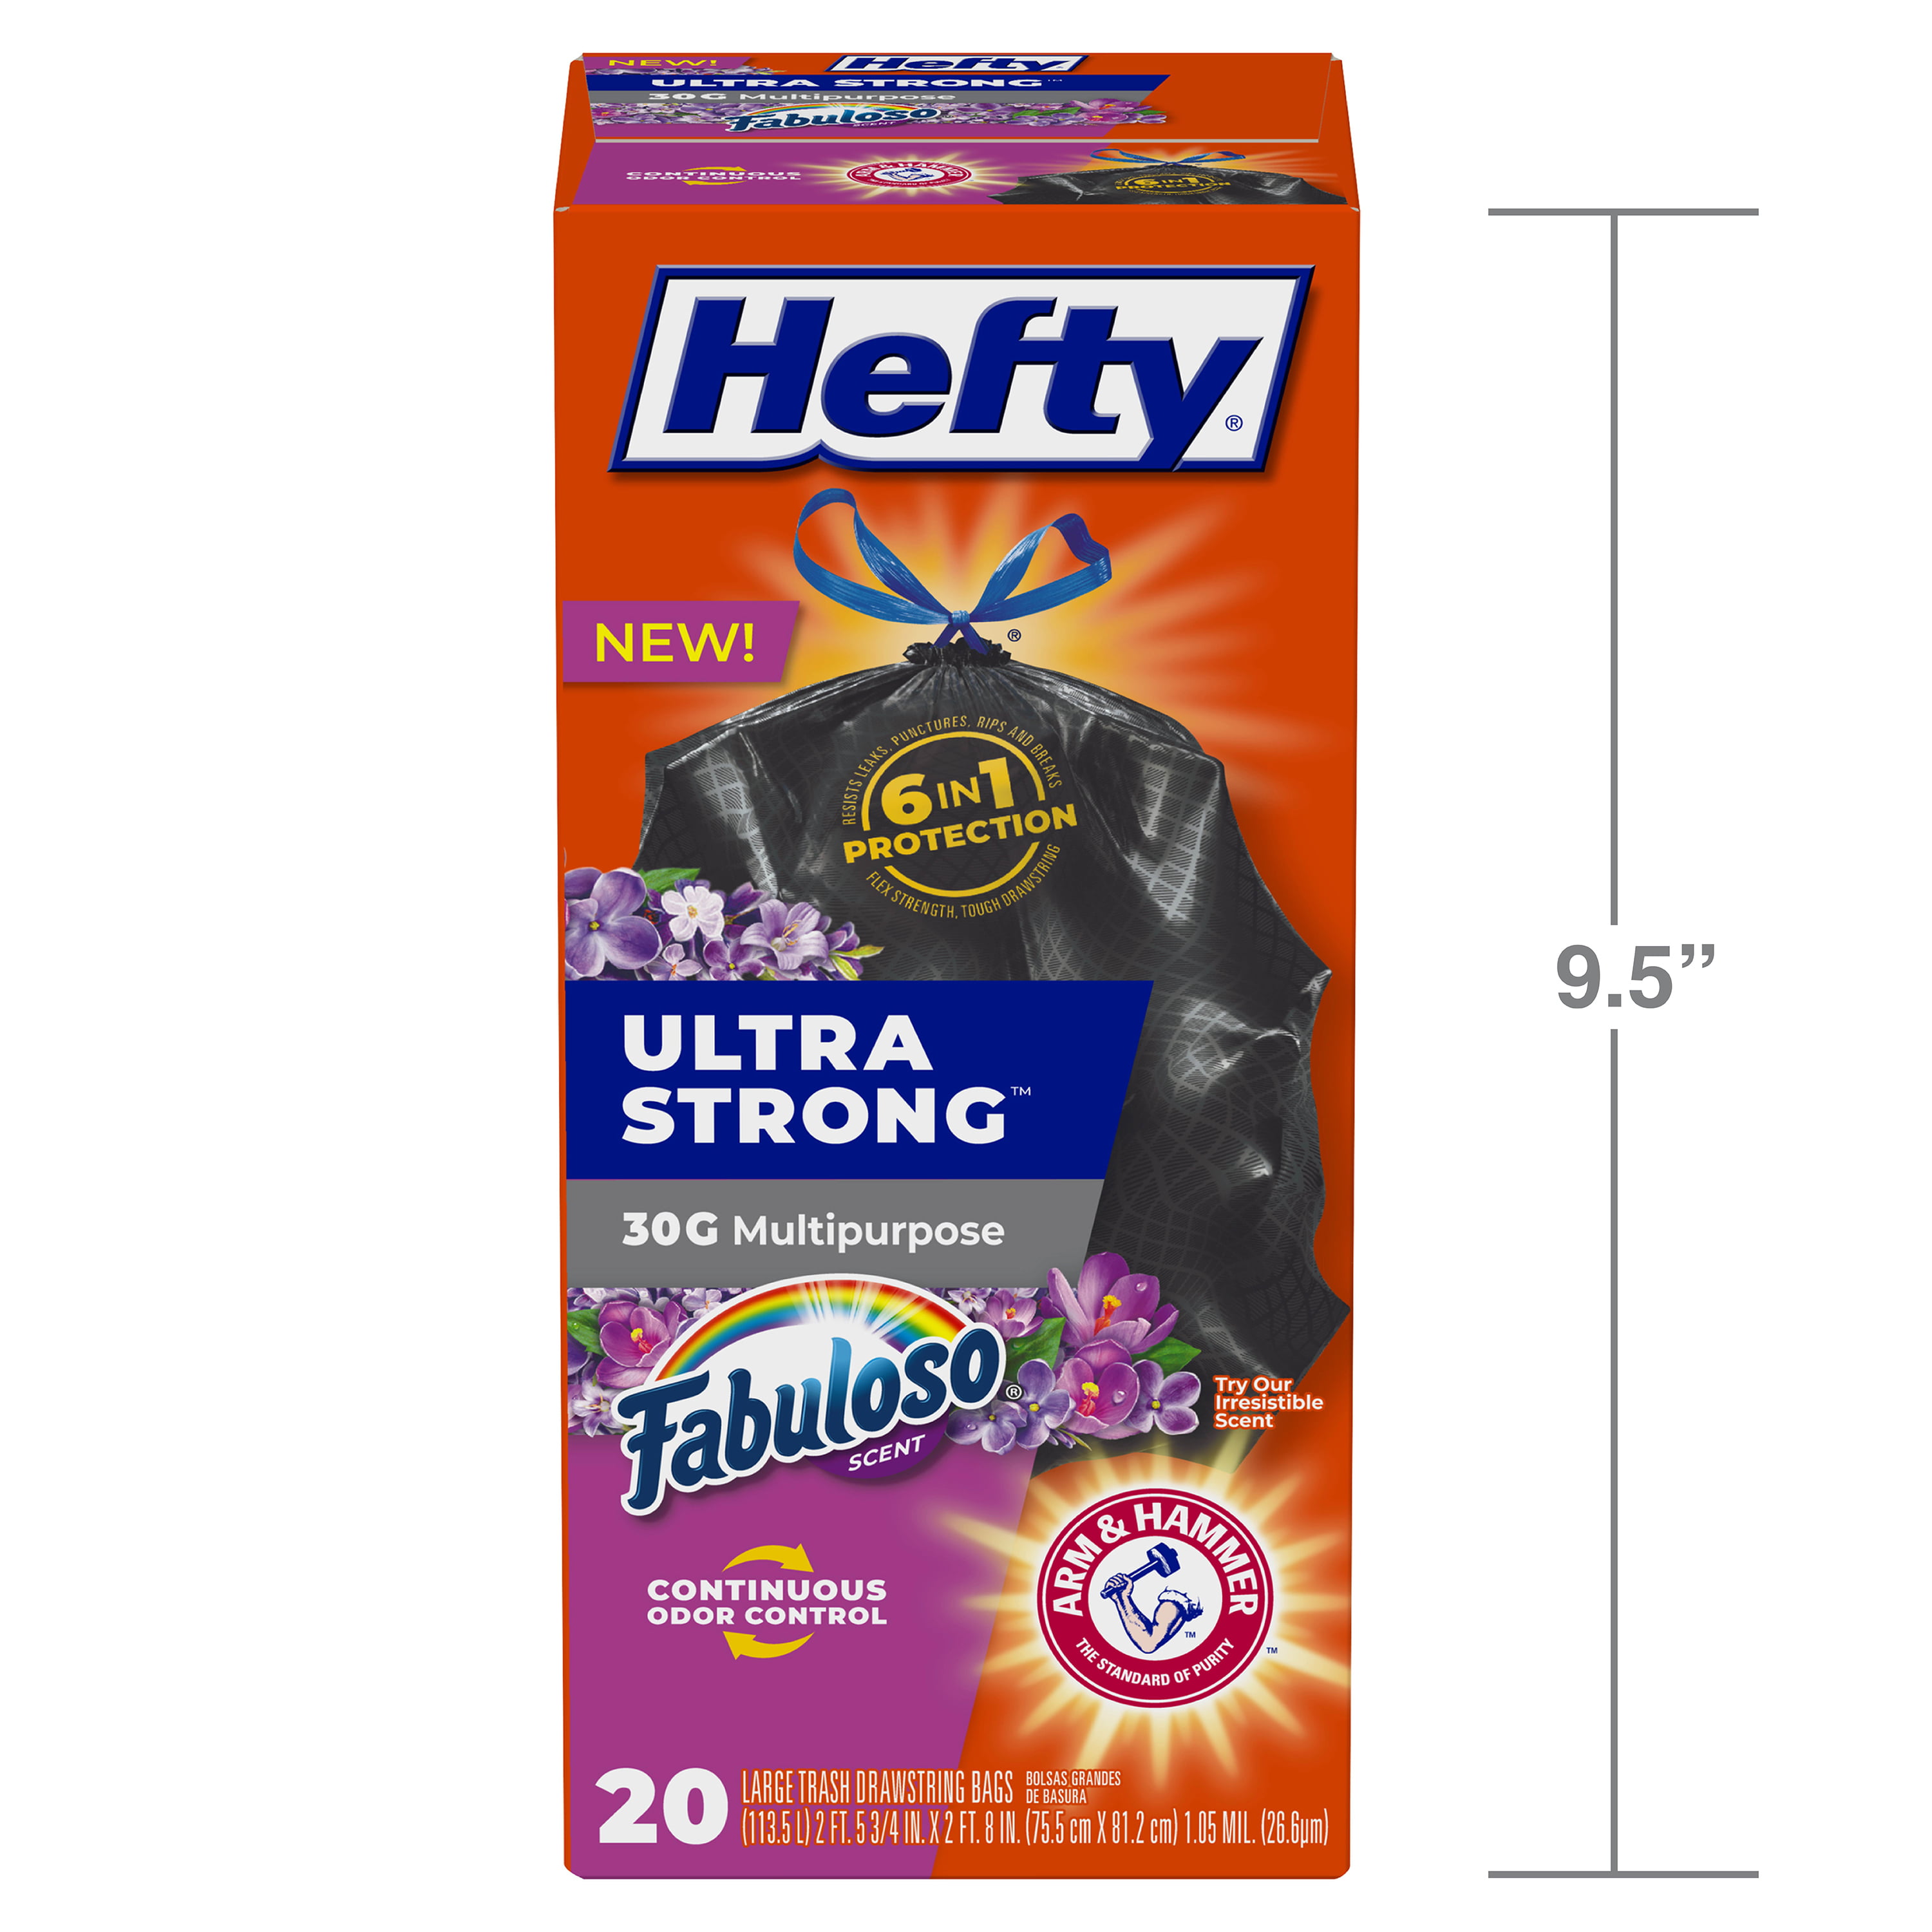 Hefty Ultra Strong Multipurpose Large Trash Bags, Black, Fabuloso Lemon  Scent, 30 Gallon, 50ct